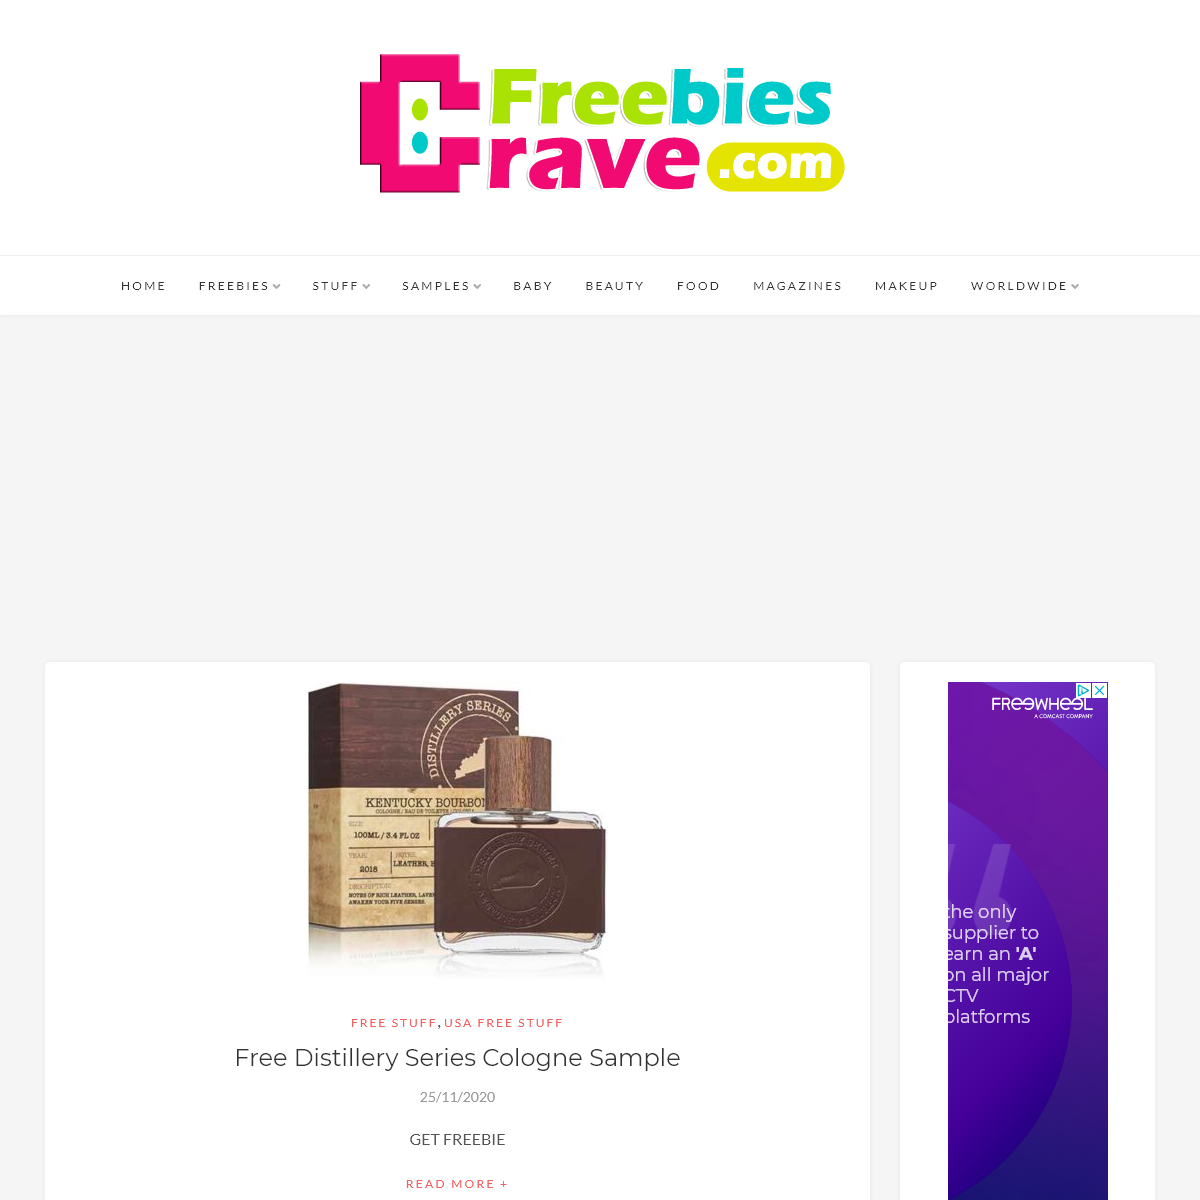 A complete backup of cravefreebies.com